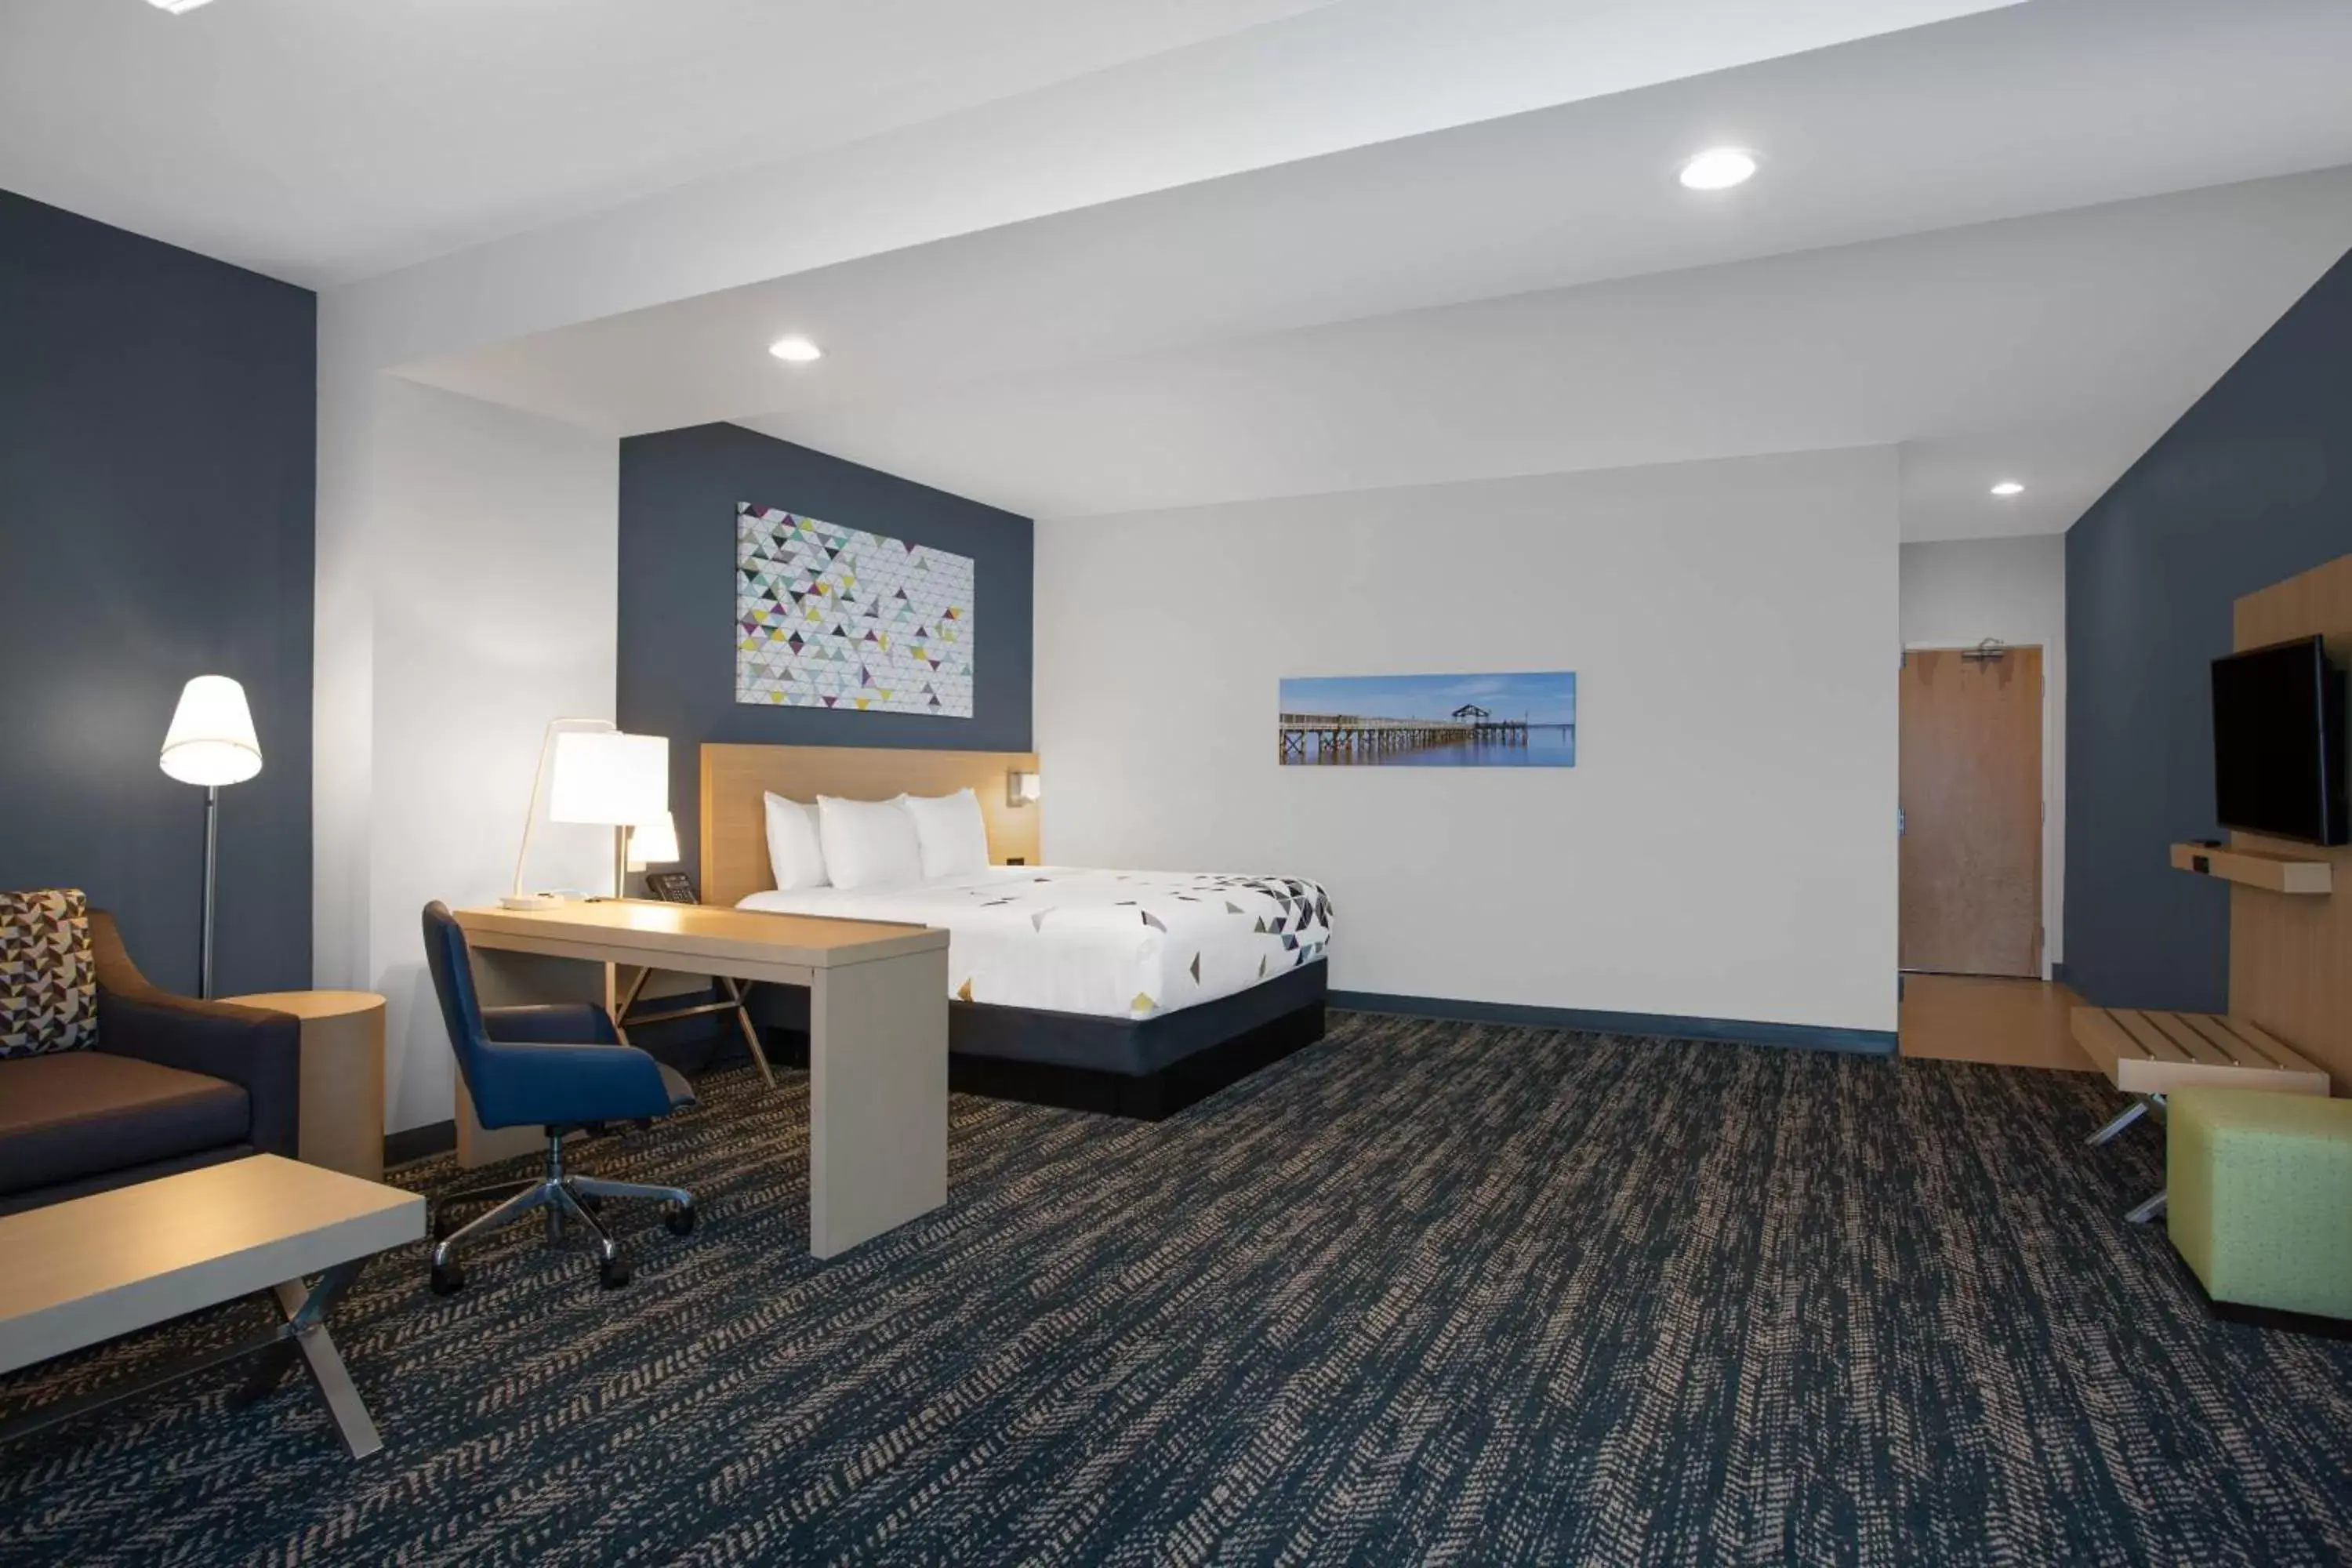 La Quinta Inn & Suites by Wyndham Manassas, VA- Dulles Airport